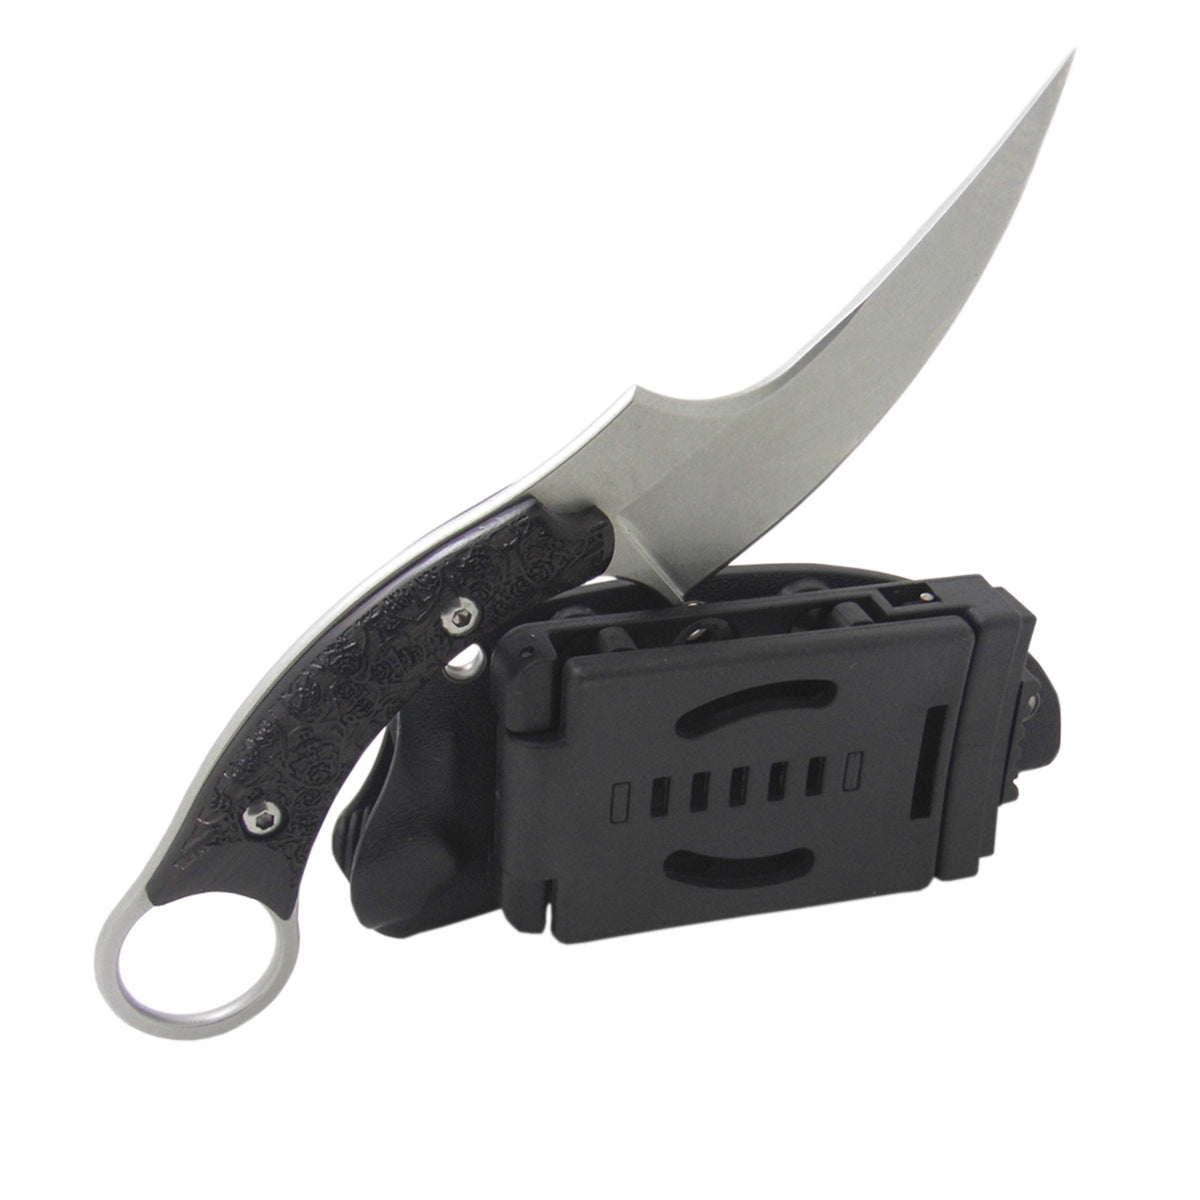 MASALONG Kni163 Tactical Hunting Survival Multi-functional Karambit Knife 440C Steel